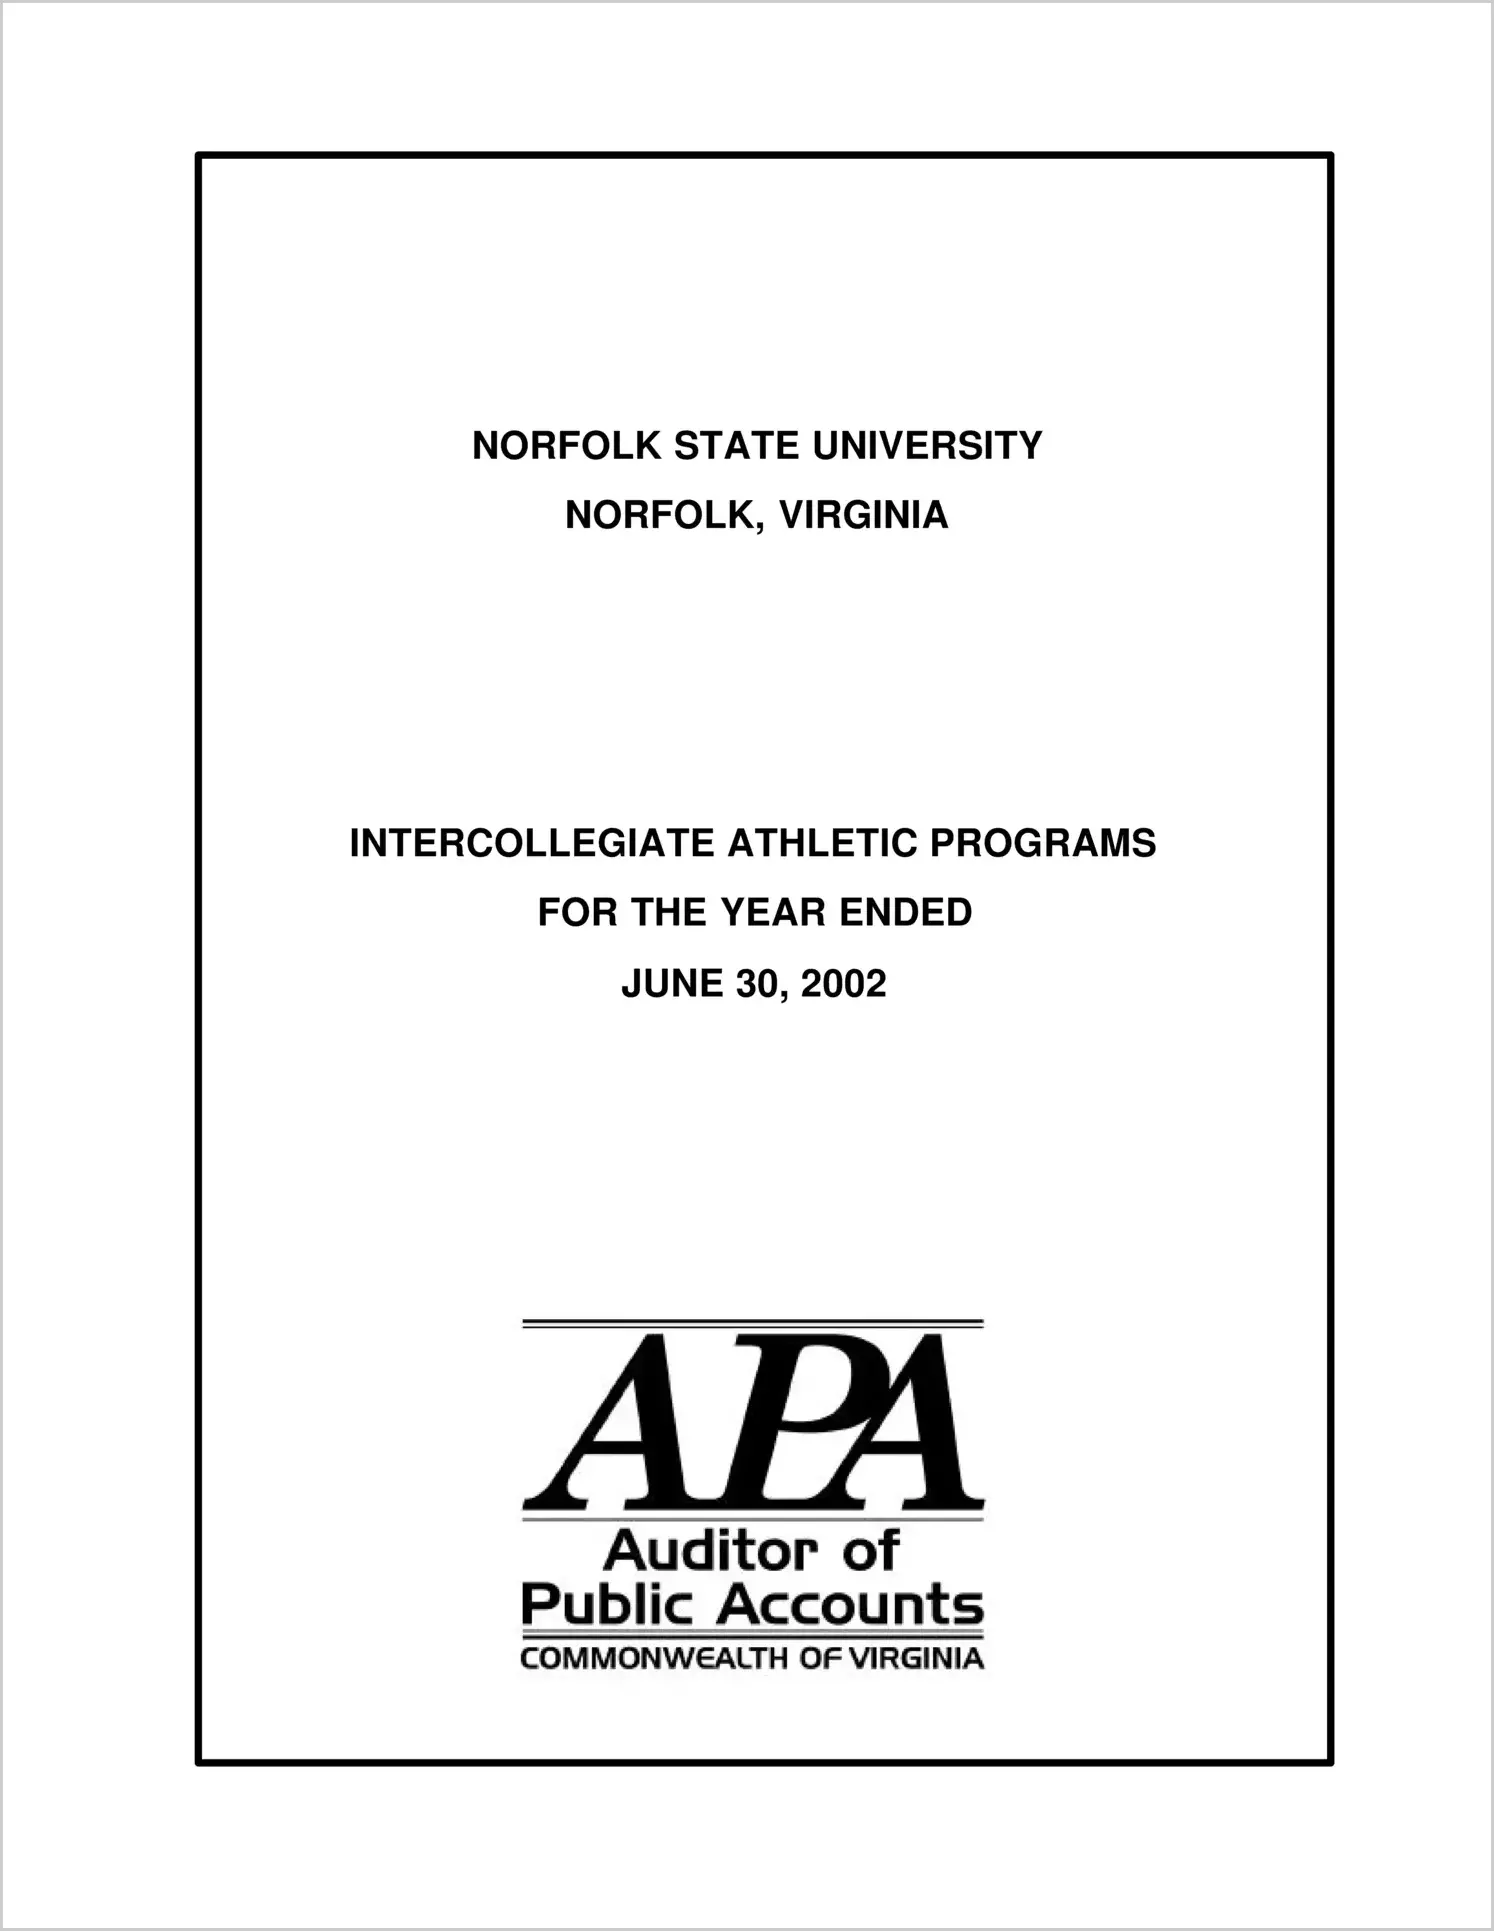 Norfolk State University Intercollegiate Athletic Programs for the year ended June 30, 2002